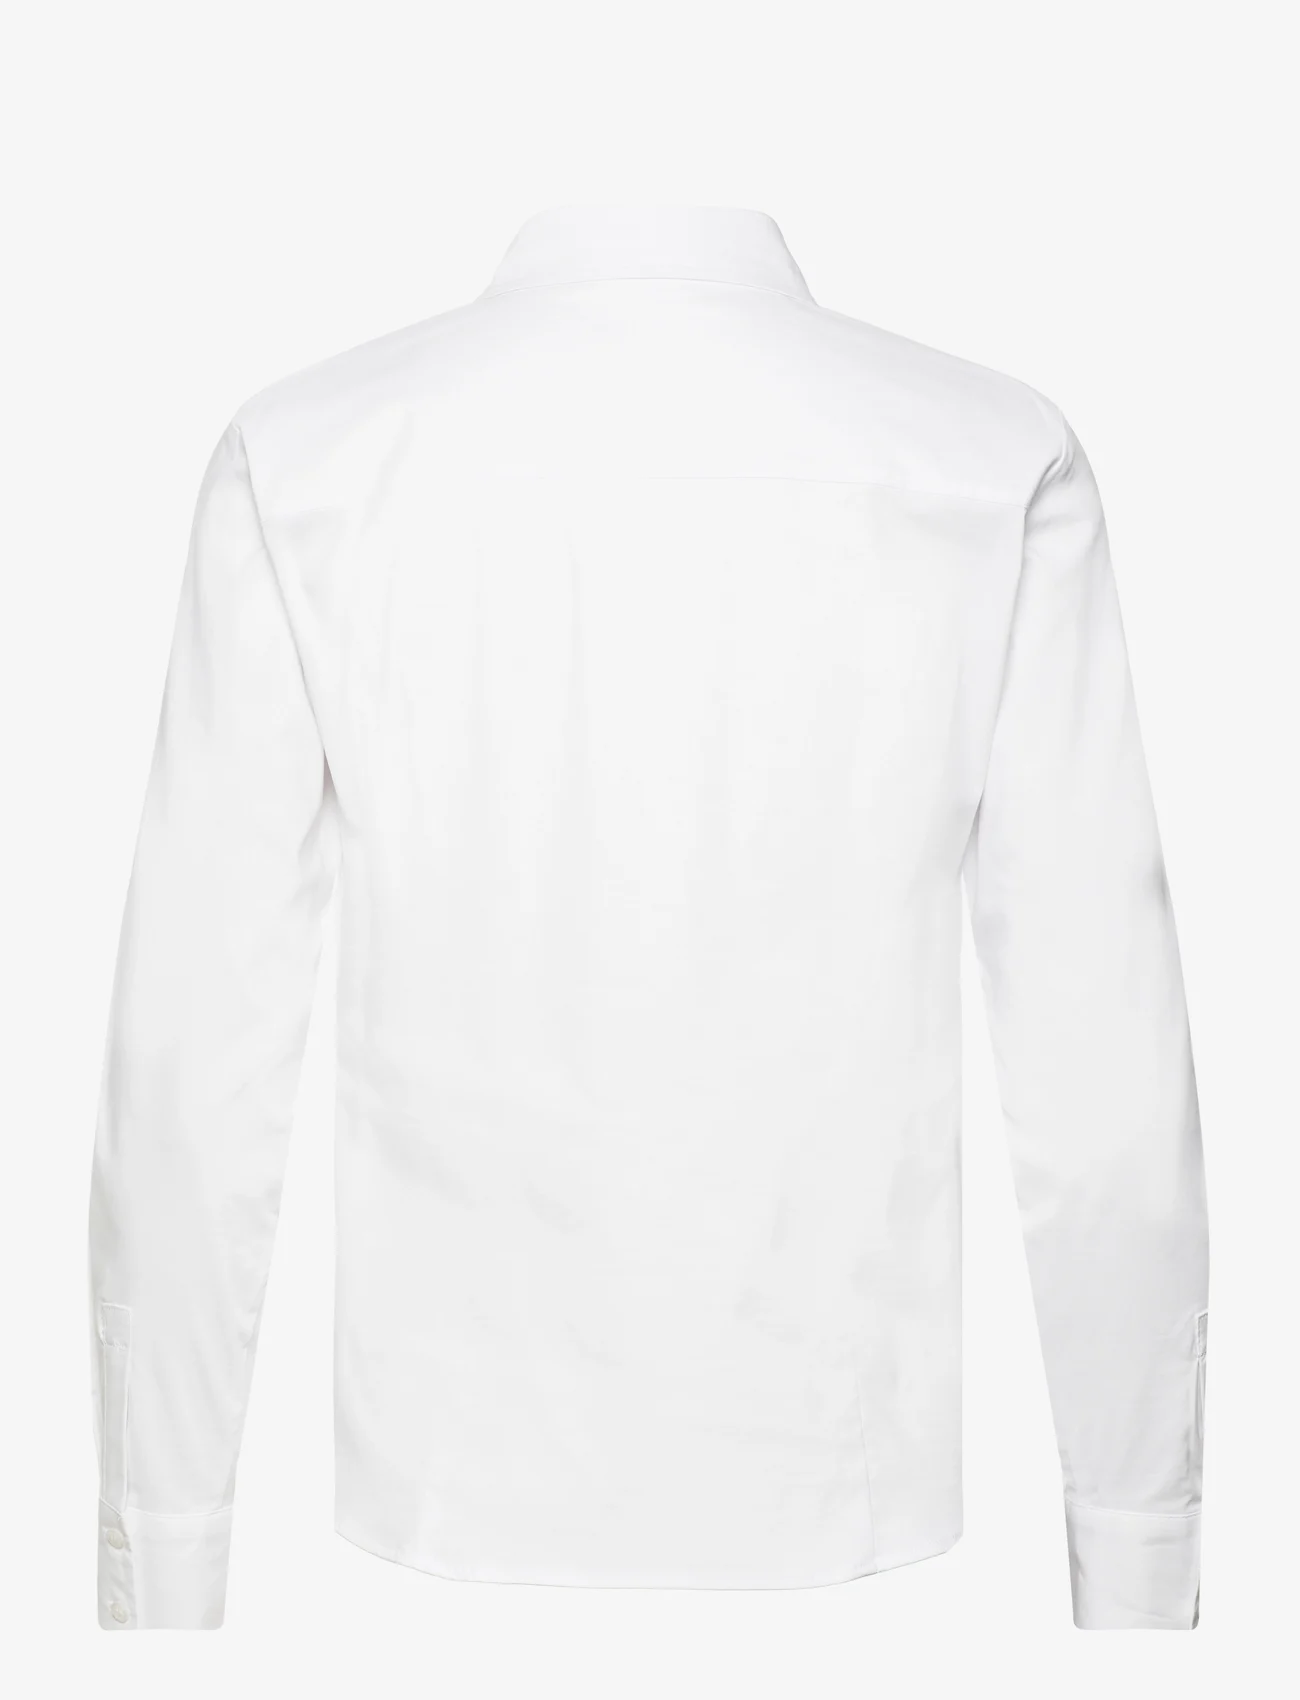 Gerry Weber - BLOUSE 1/1 SLEEVE - long-sleeved shirts - white/white - 1